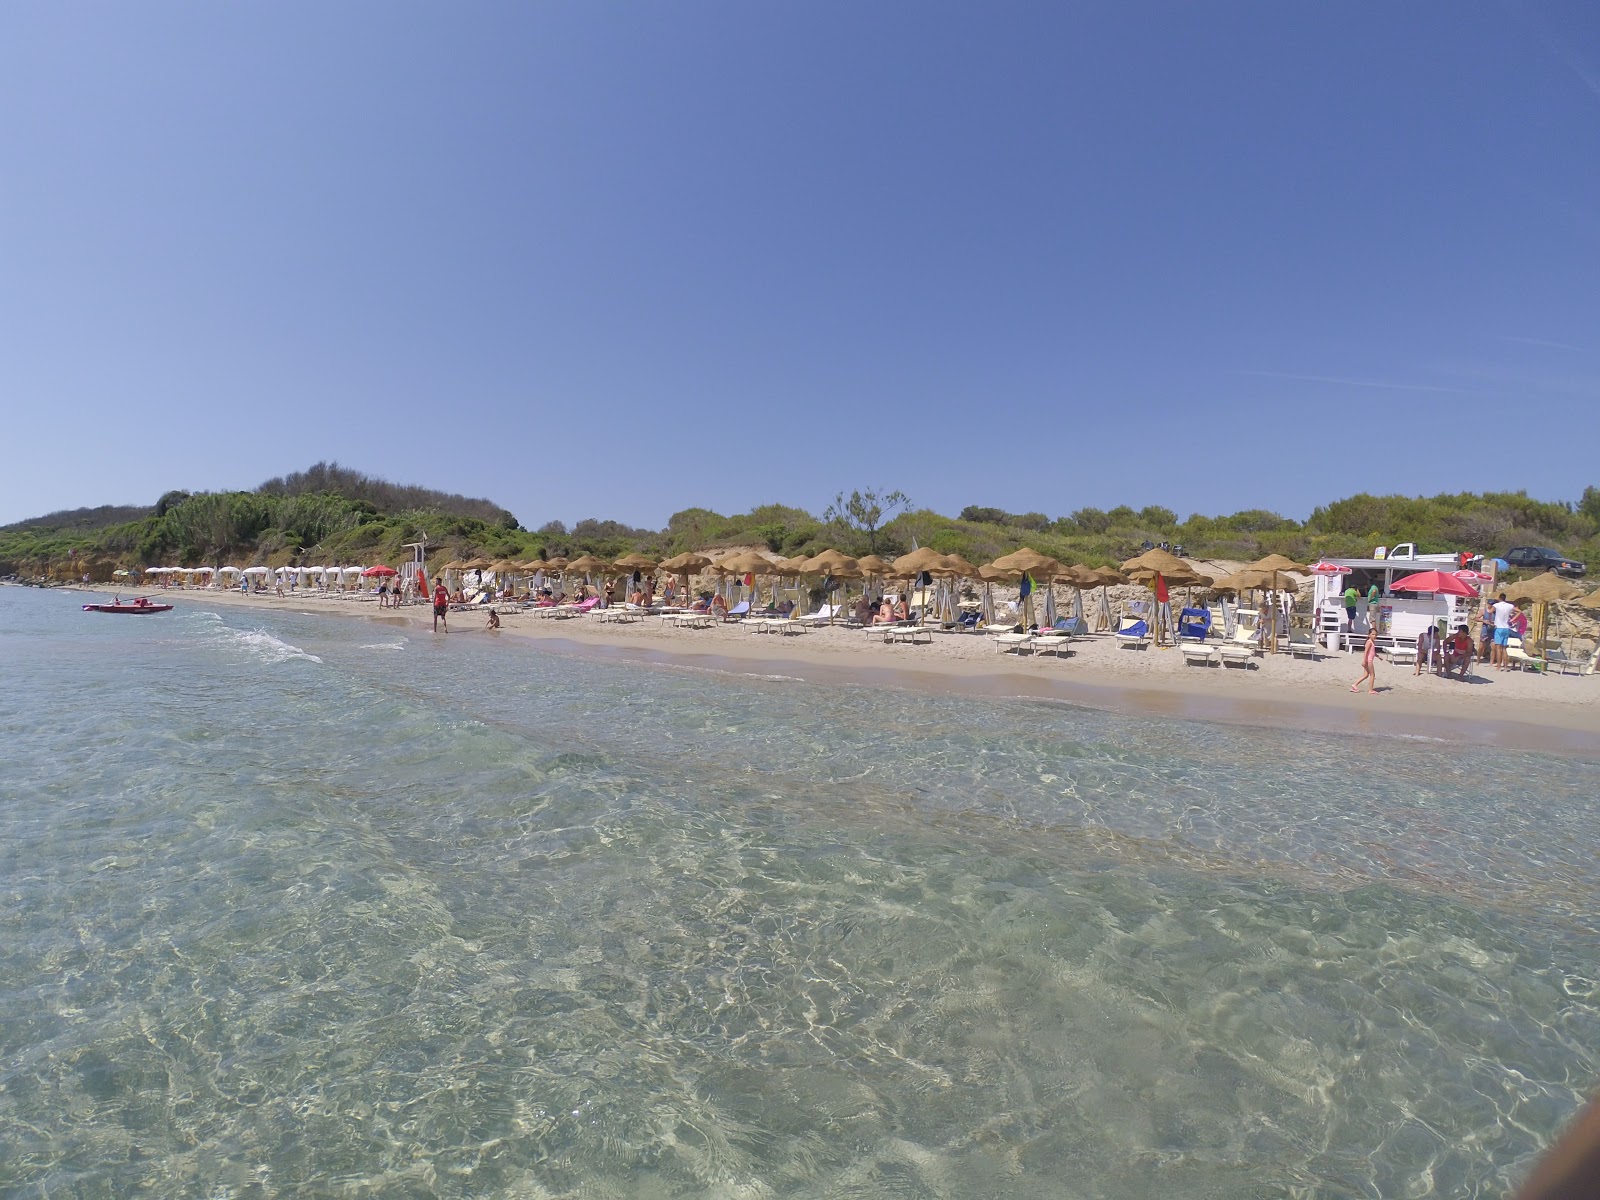 Foto de Spiaggia Alimini - lugar popular entre os apreciadores de relaxamento